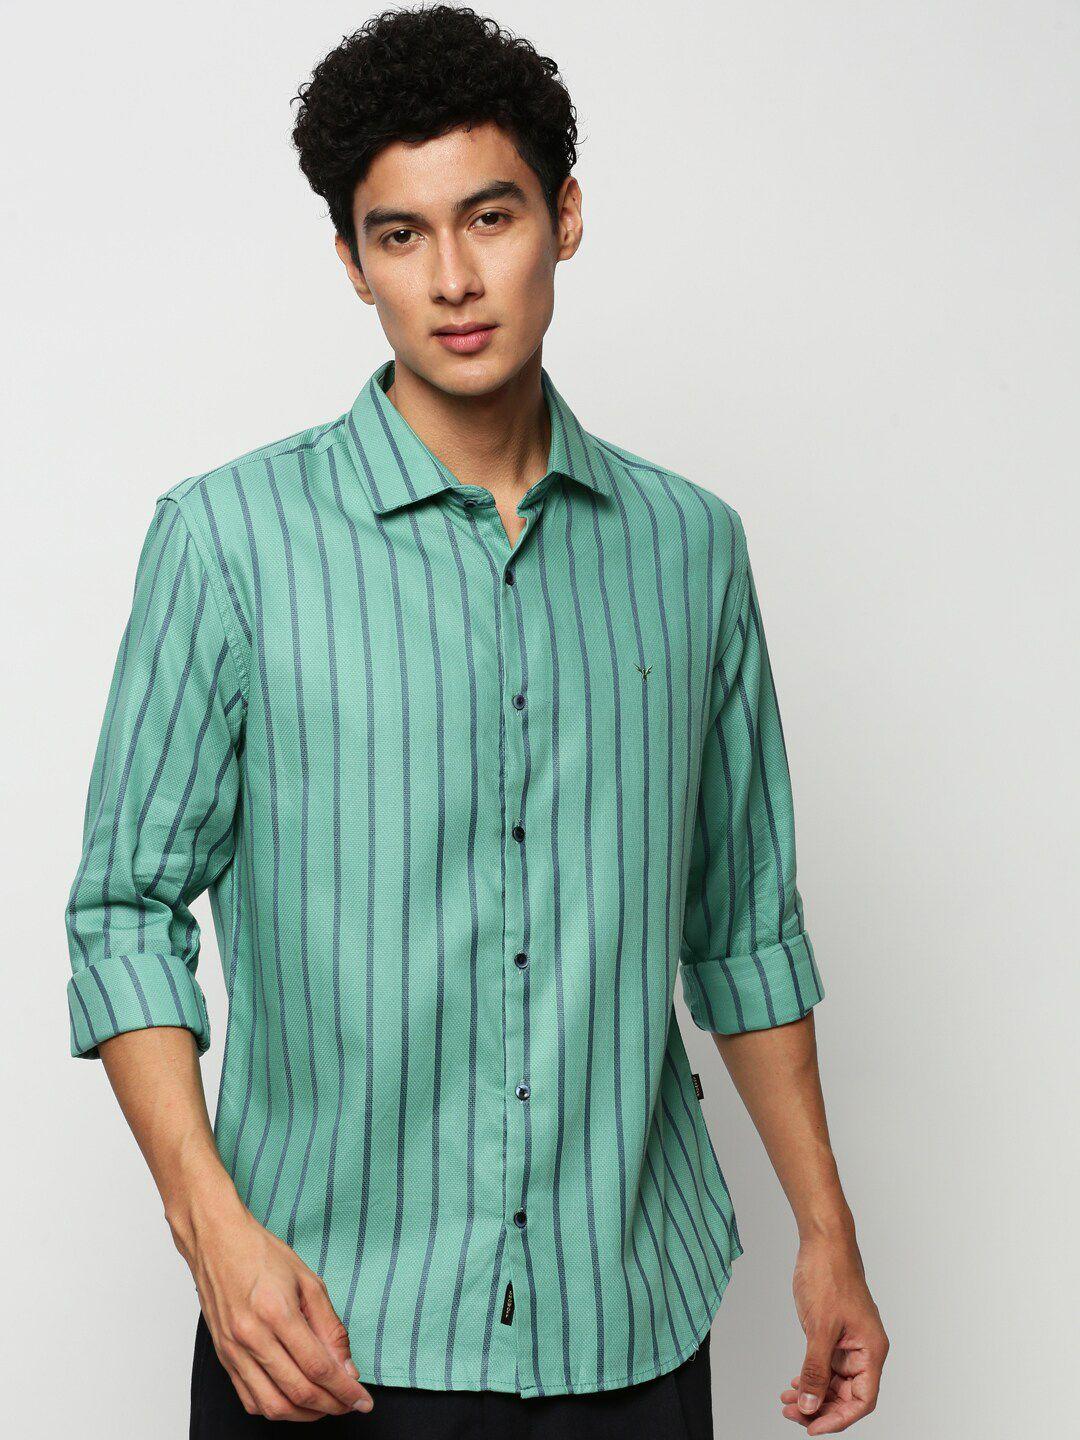 SHOWOFF Premium Slim Fit Vertical Striped Opaque Cotton Casual Shirt